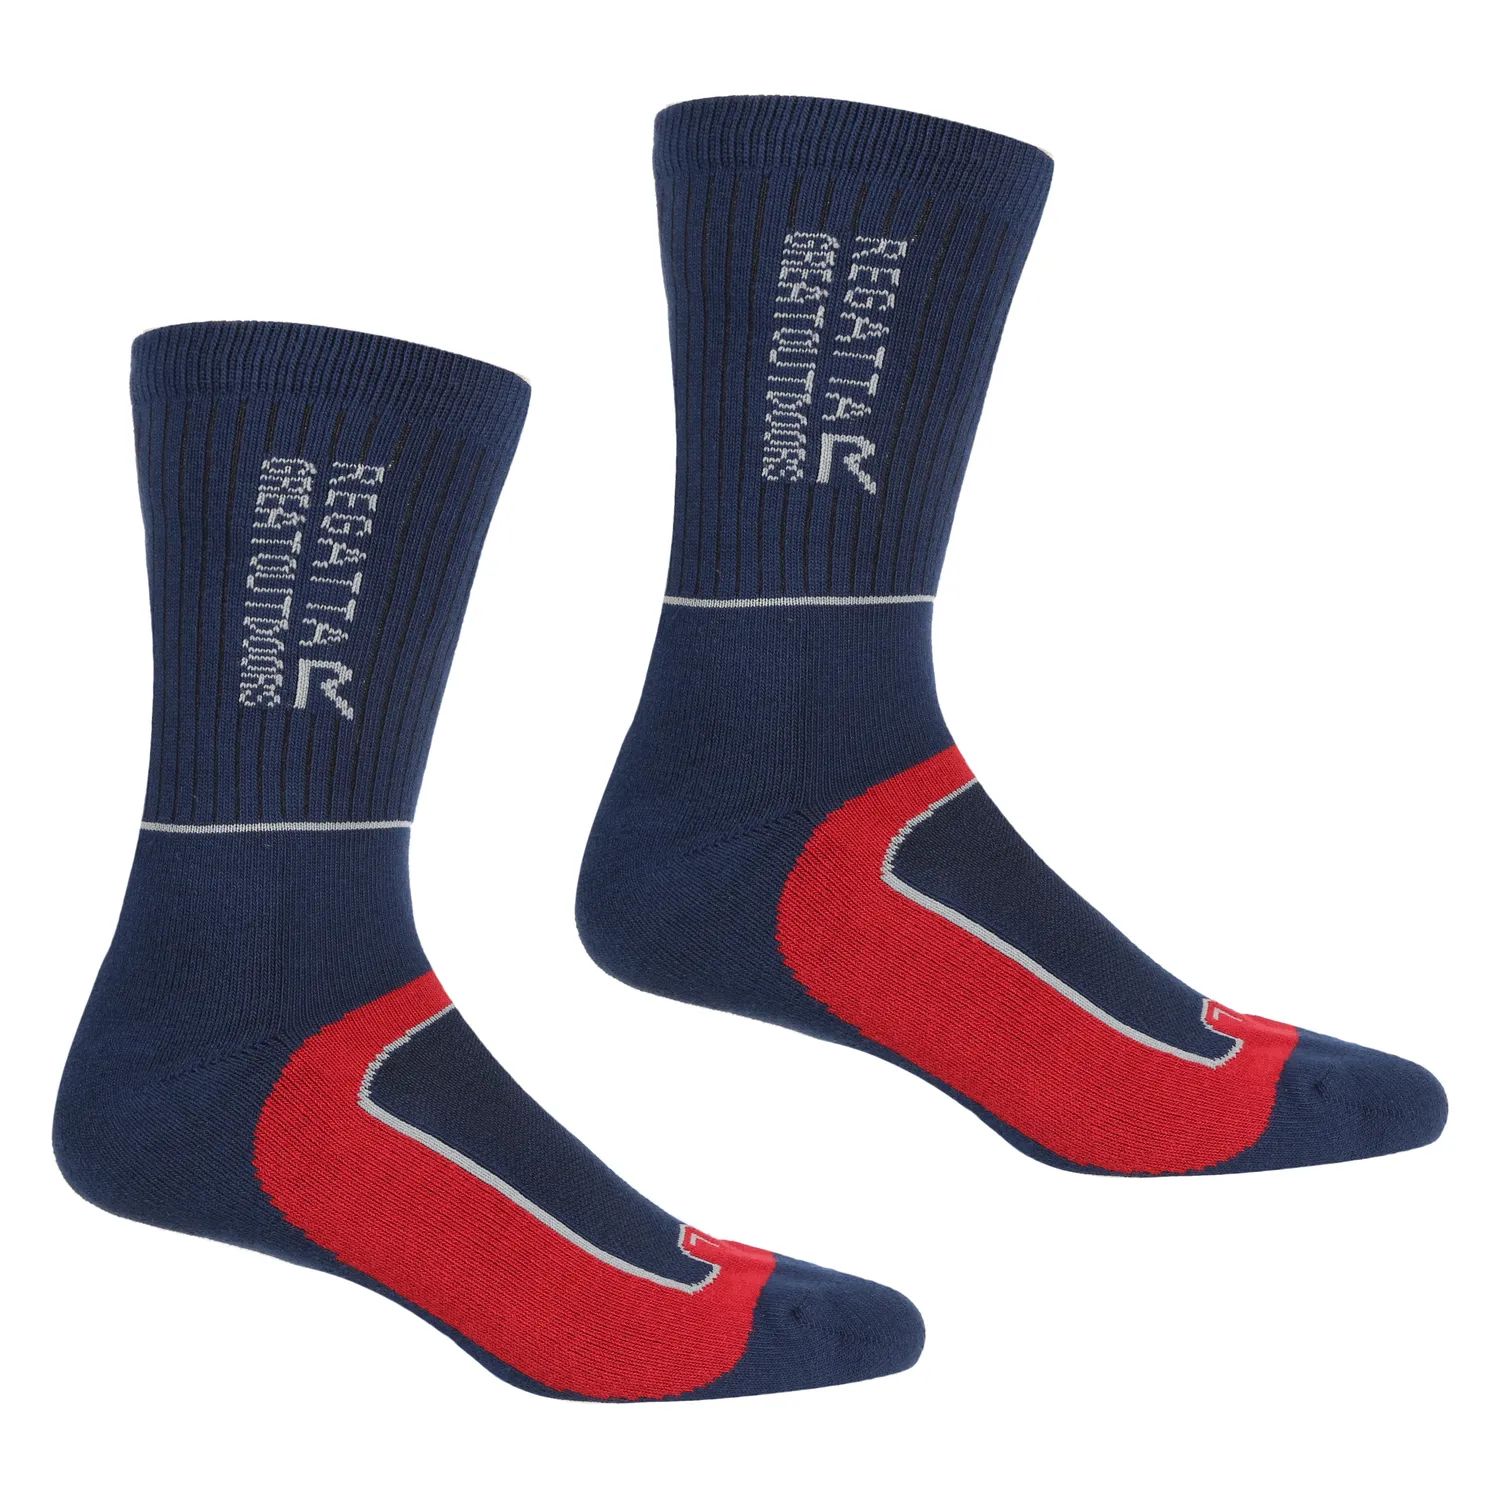 Regatta Samaris 2 Season Walking Socks (Navy/DarkRed)